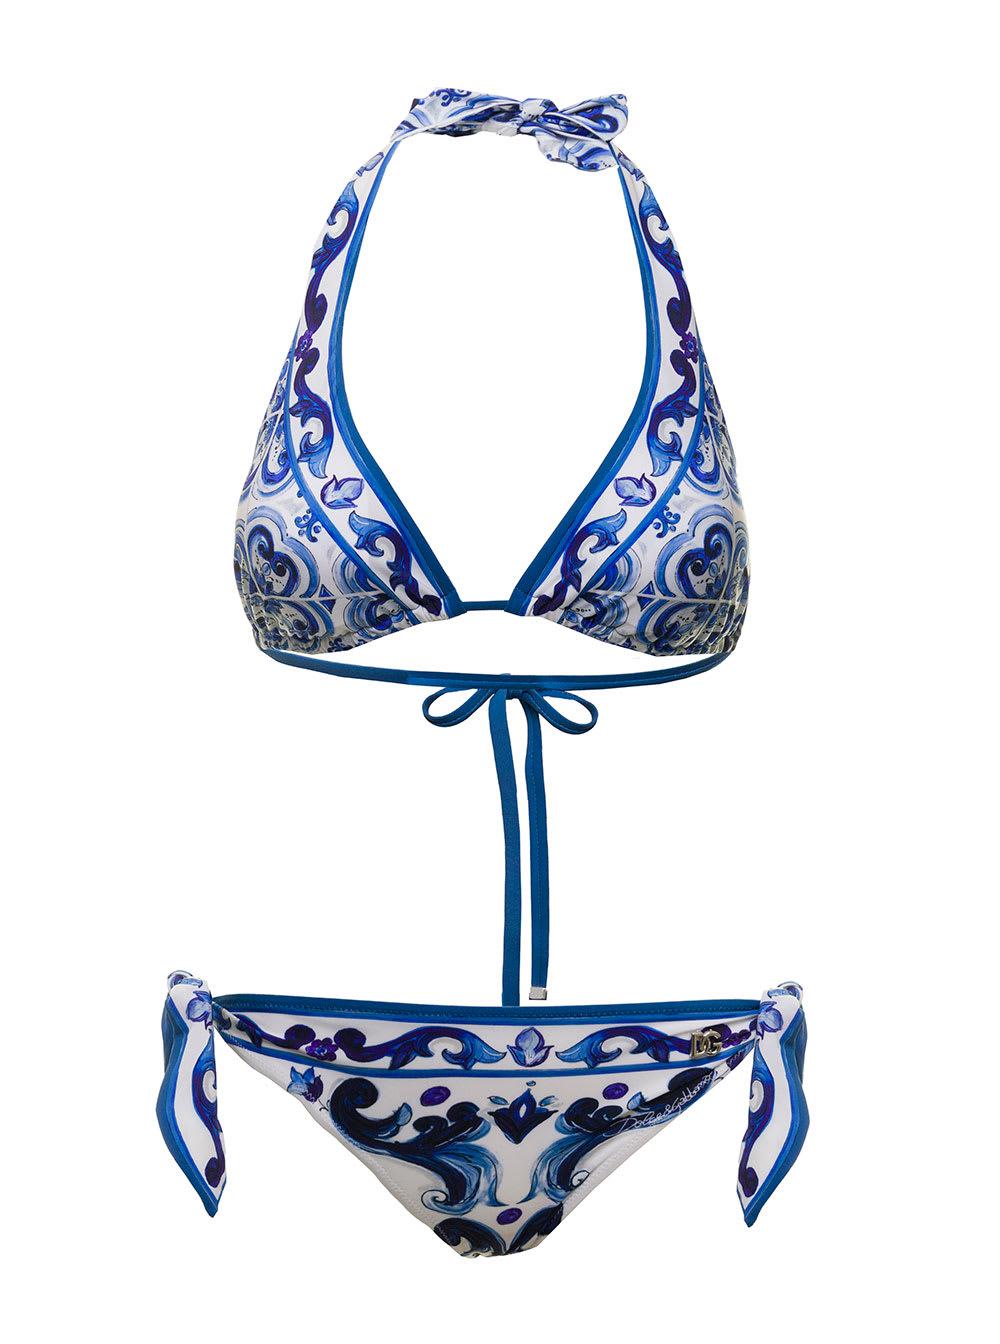 Dolce & Gabbana Floral-print Triangle Bikini in Black Save 15% Womens Beachwear and swimwear outfits Dolce & Gabbana Beachwear and swimwear outfits 